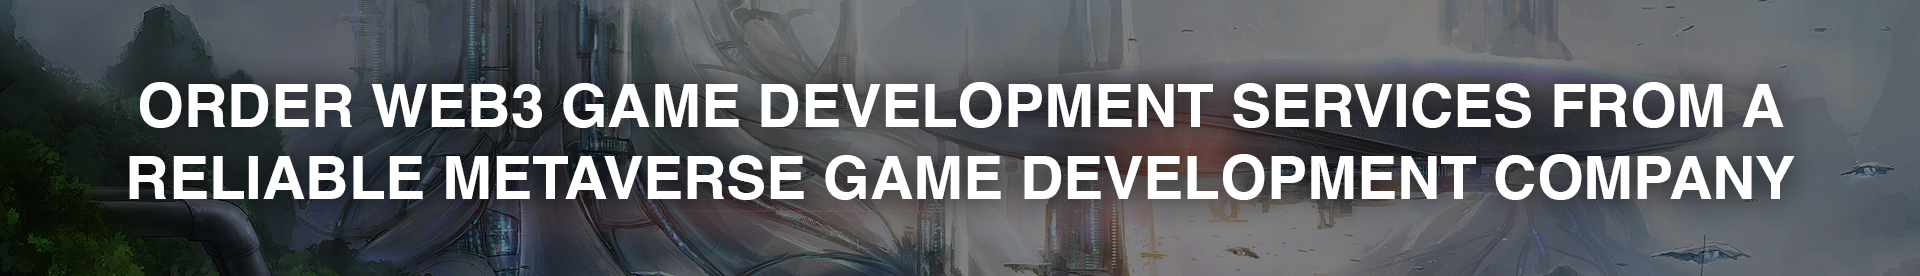 metaverse game development company